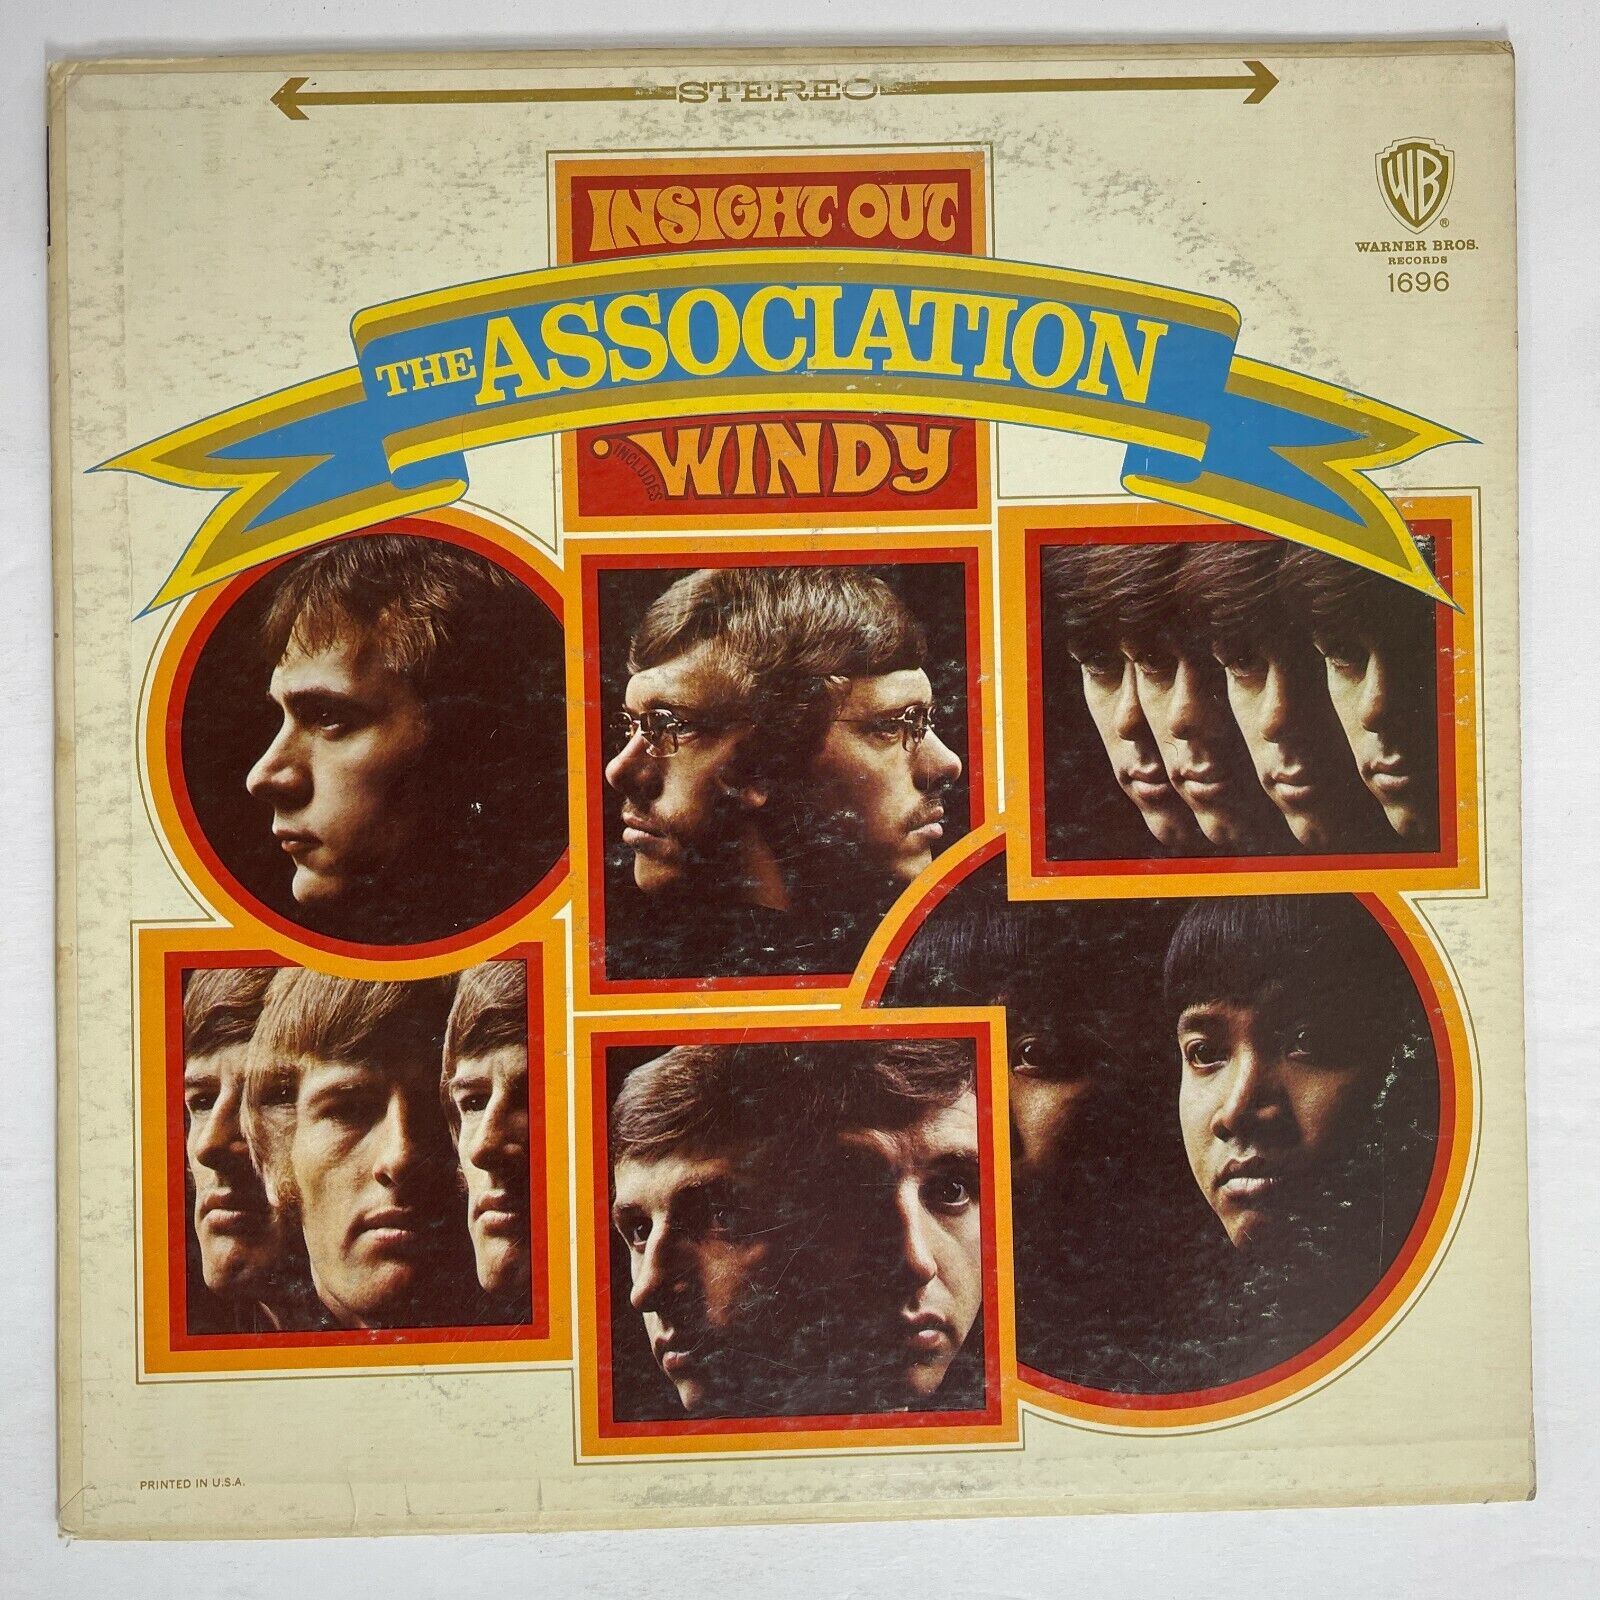 The AssociationInsight Out Vinyl, LP 1967 Warner Bros. RecordsW 1696 